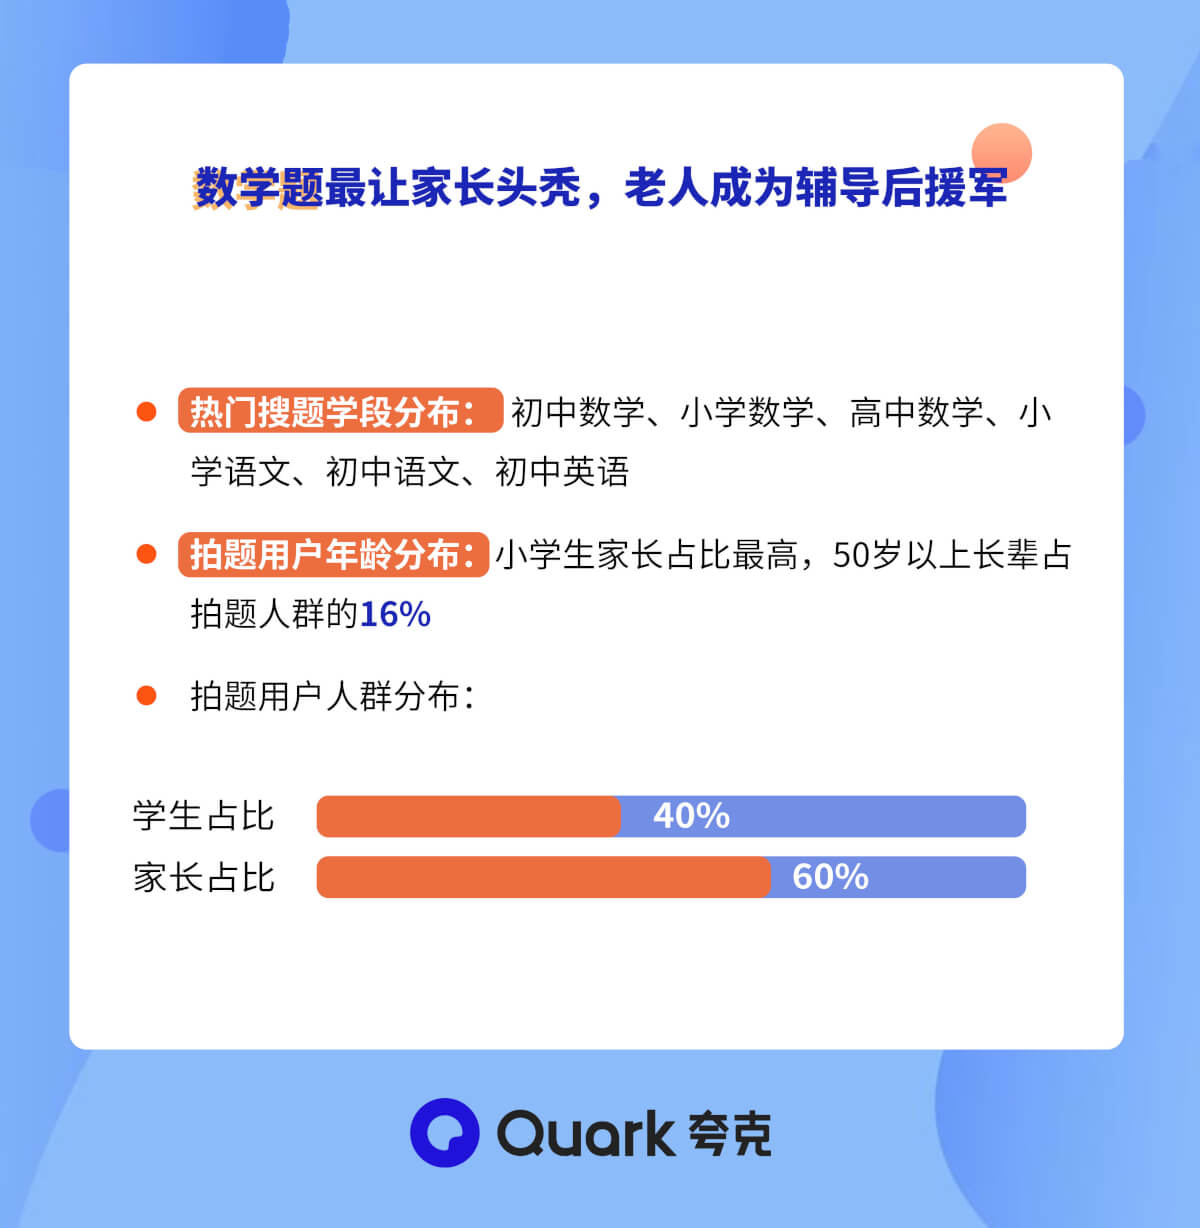 C:\Users\yuanzhi.lyz\Desktop\夸克期末备考数据报告\数据2.jpg